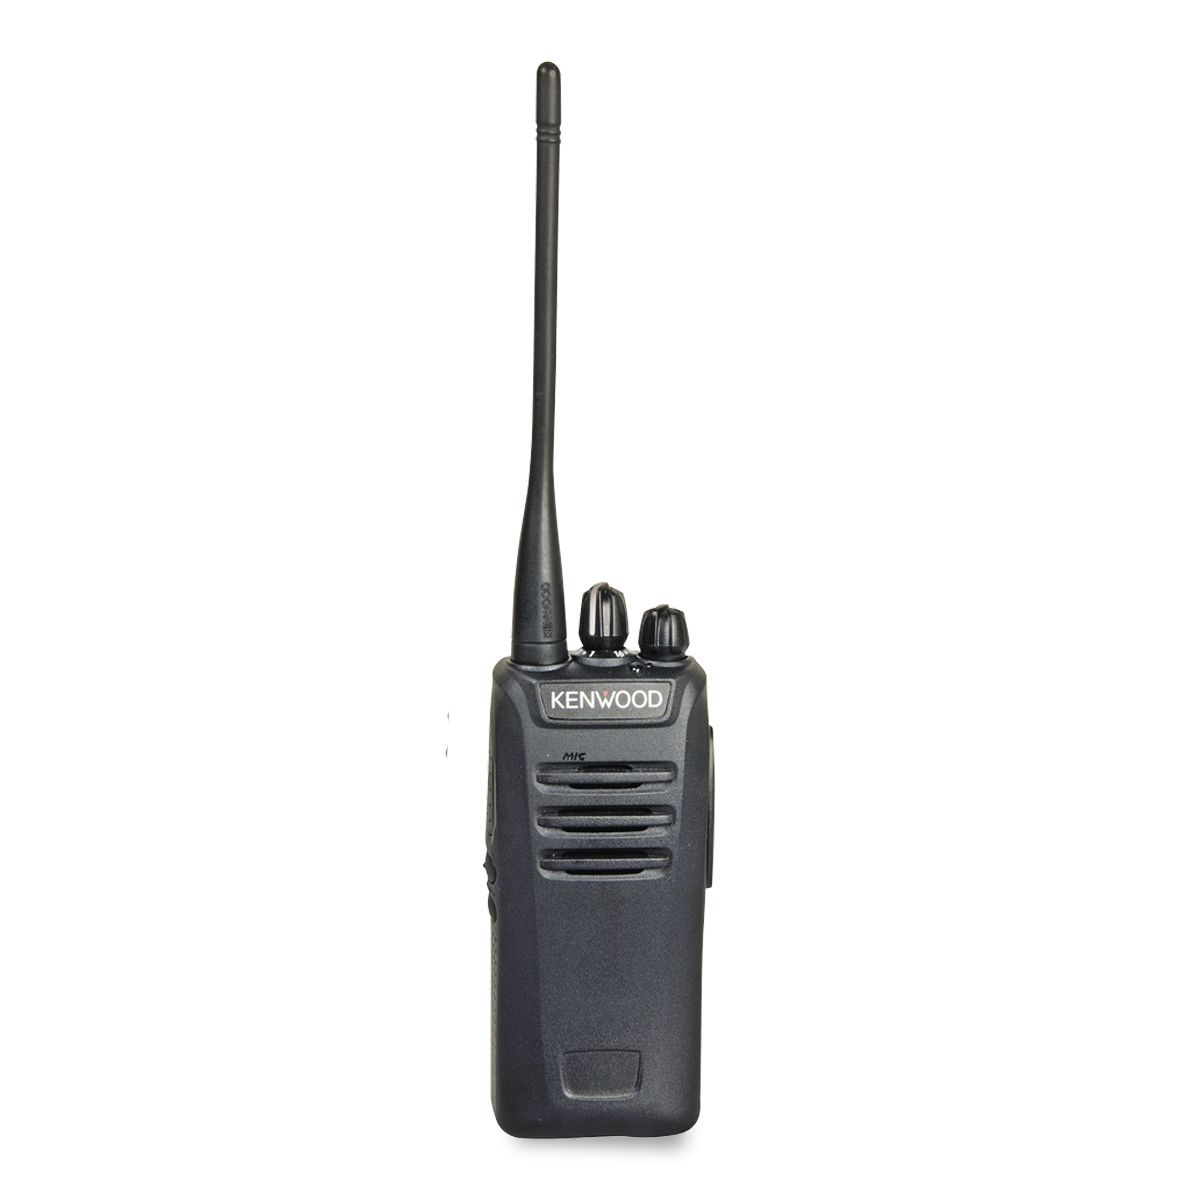 Radio KENWOOD NX-340 Digital UHF 400-470 MHz